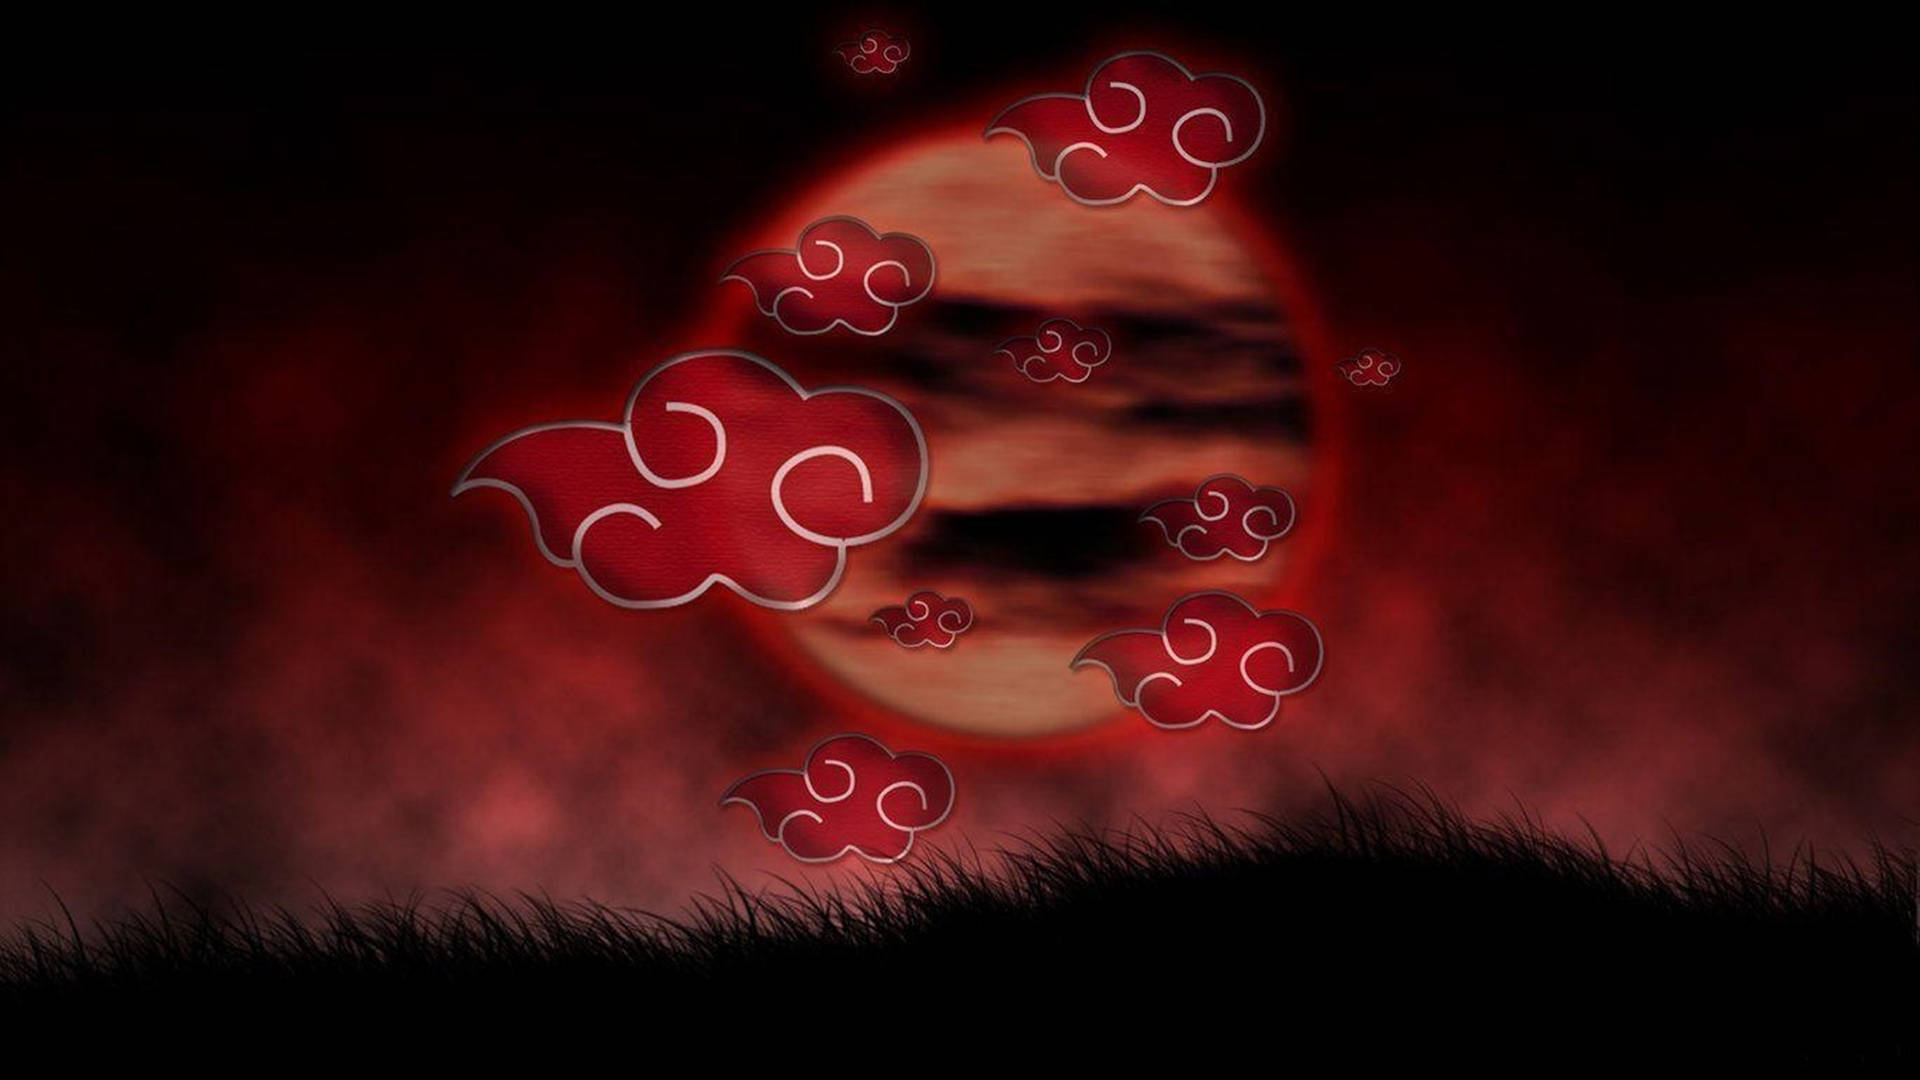 Akatsuki Logo And Blood Moon Wallpaper